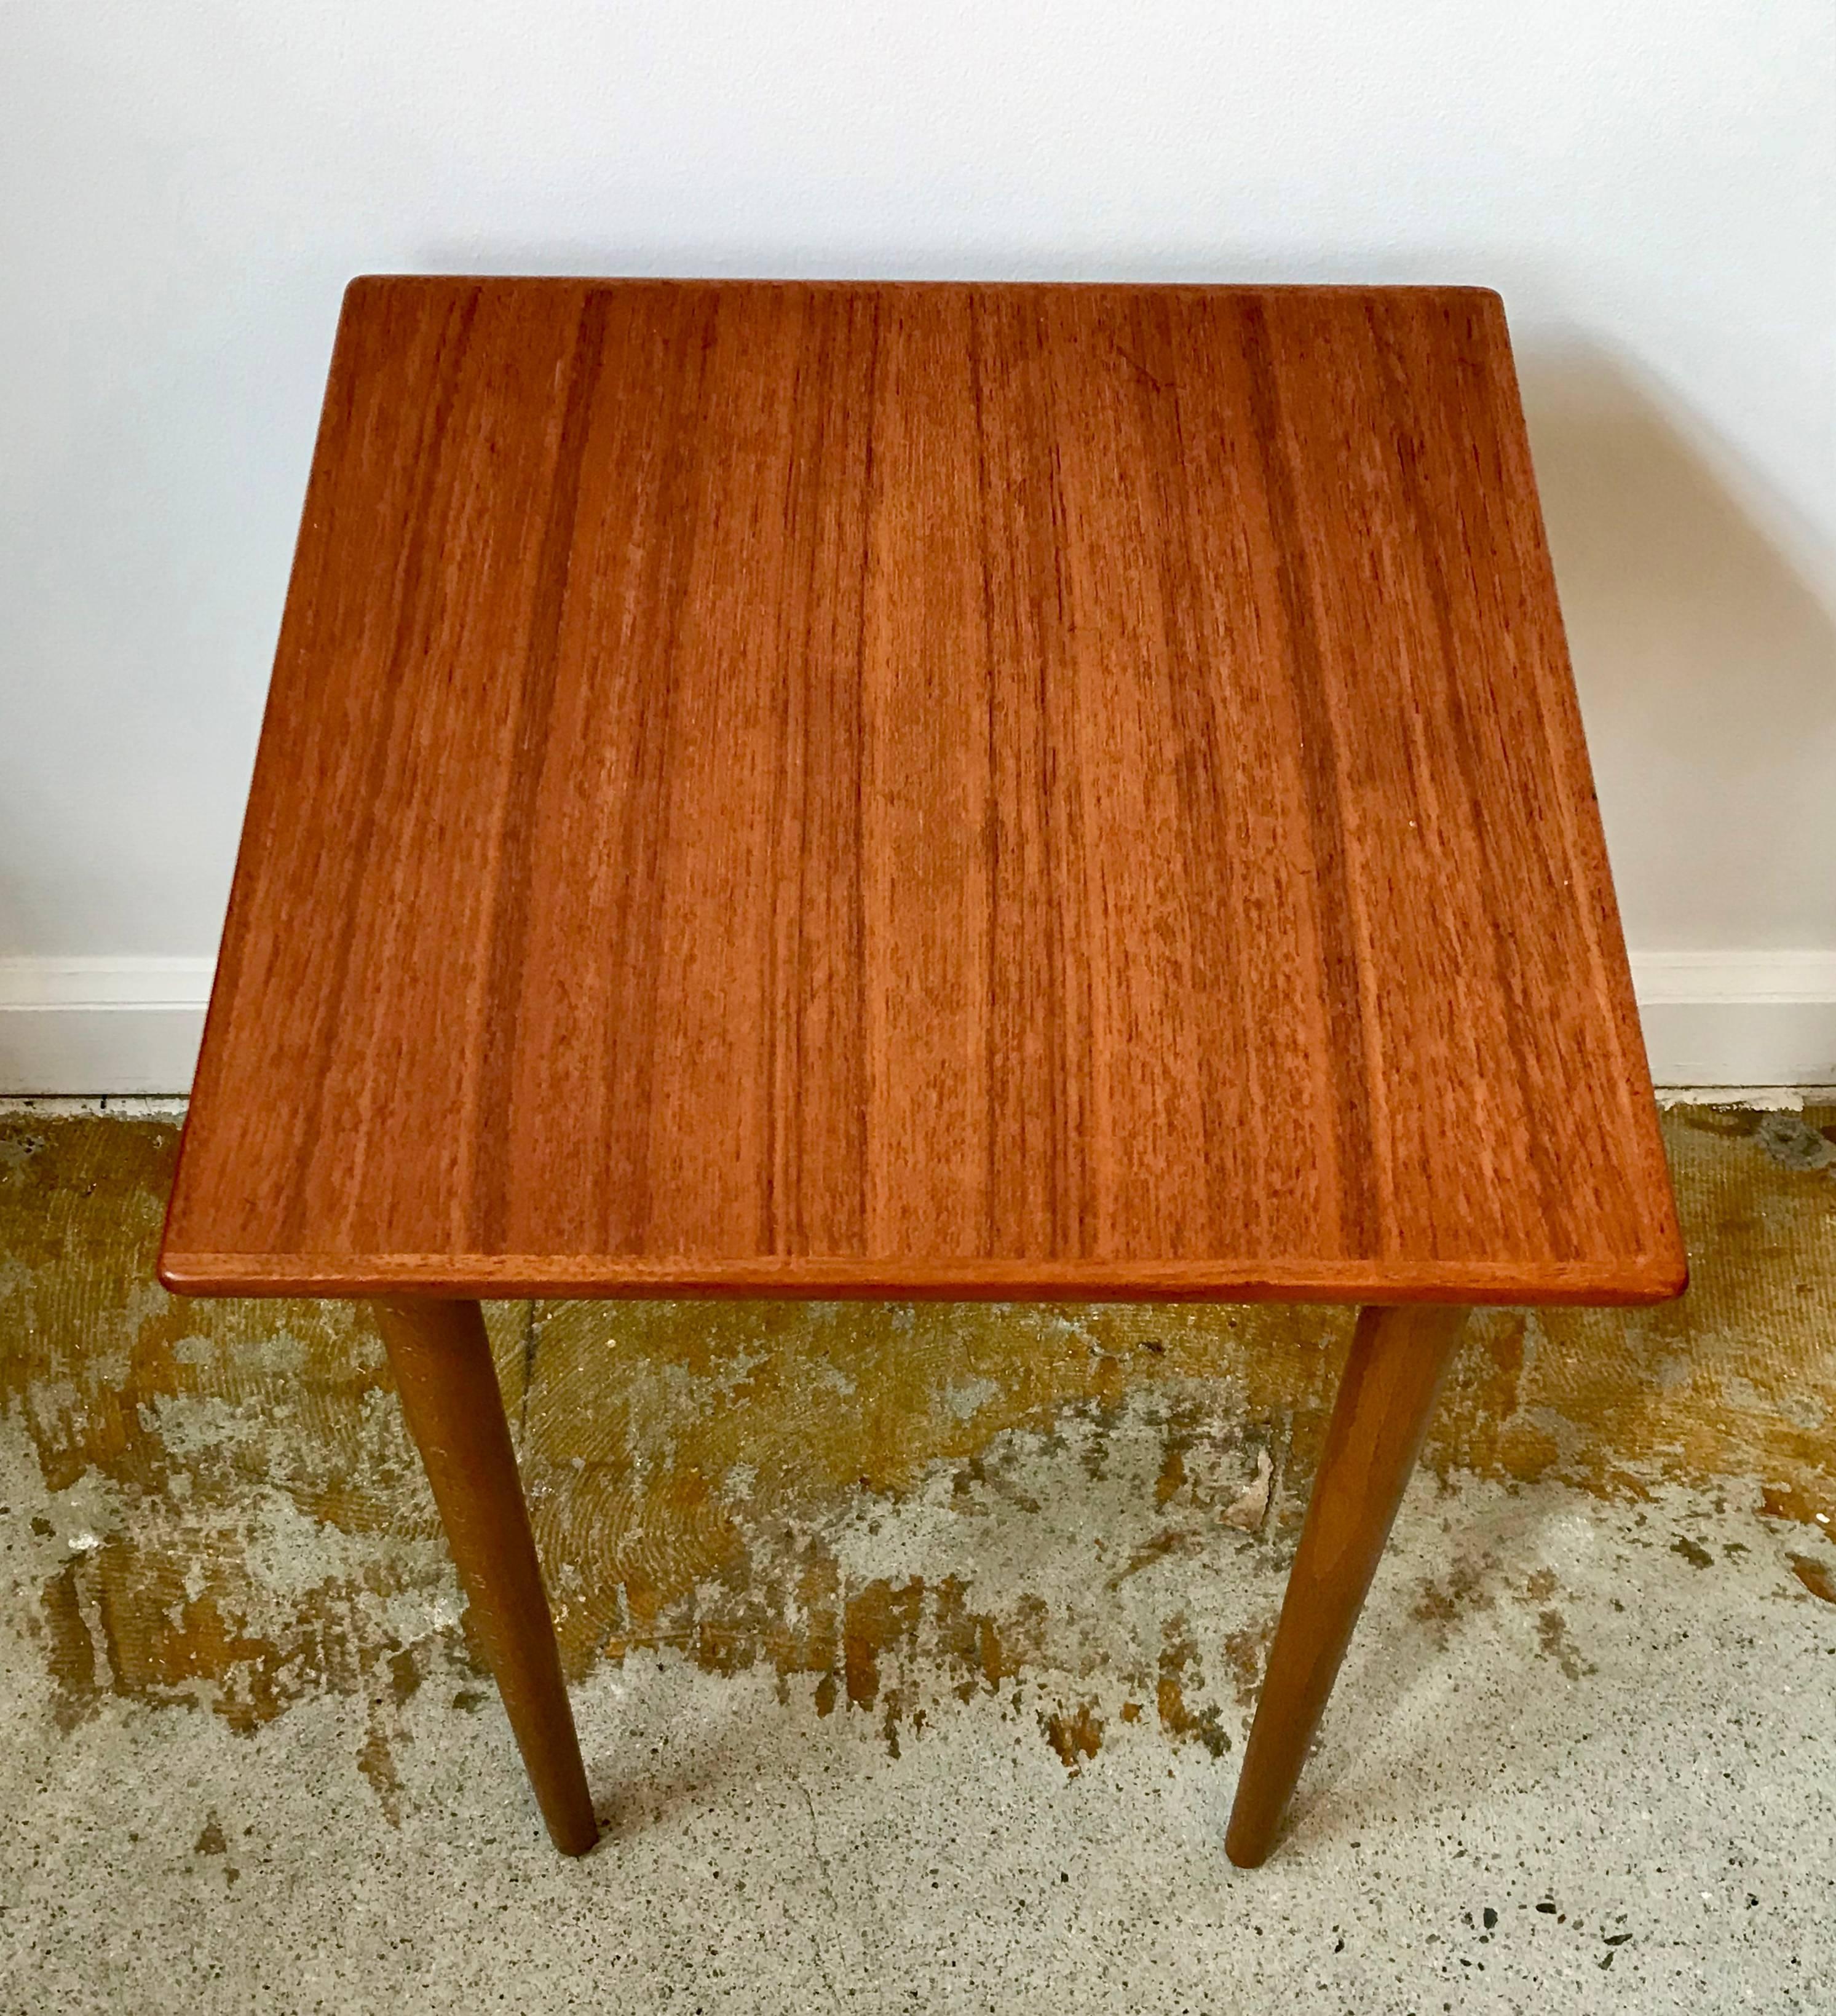 Very cute petite tapered leg side table made of teak, nice mitered edges, 1960s Danish.